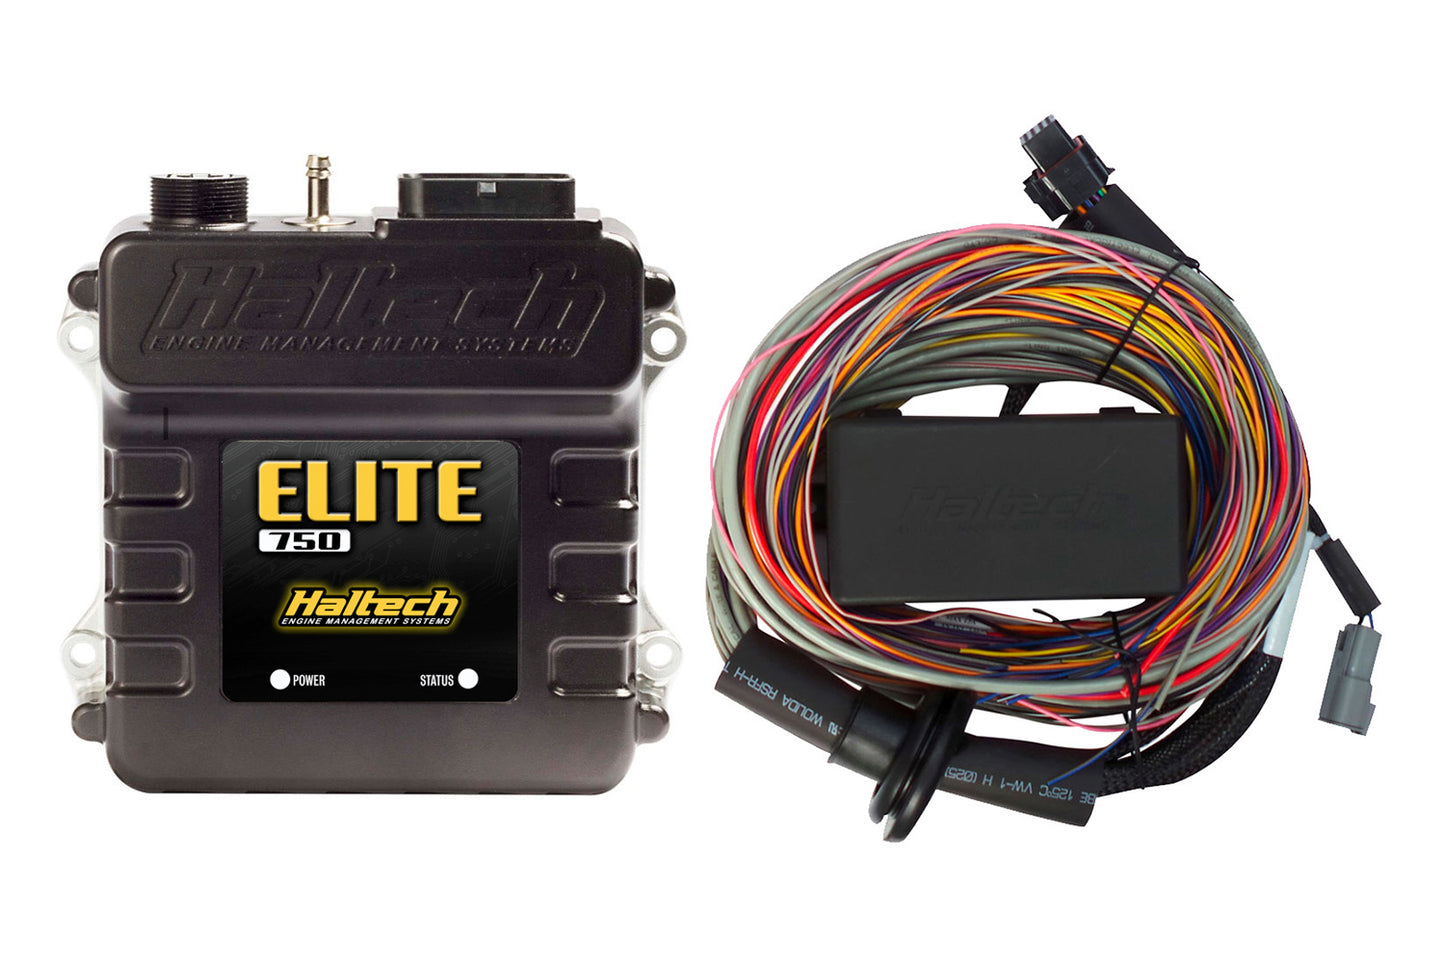 Haltech Elite 750 + Premium Universal Wire-in Harness Kit HT-150604